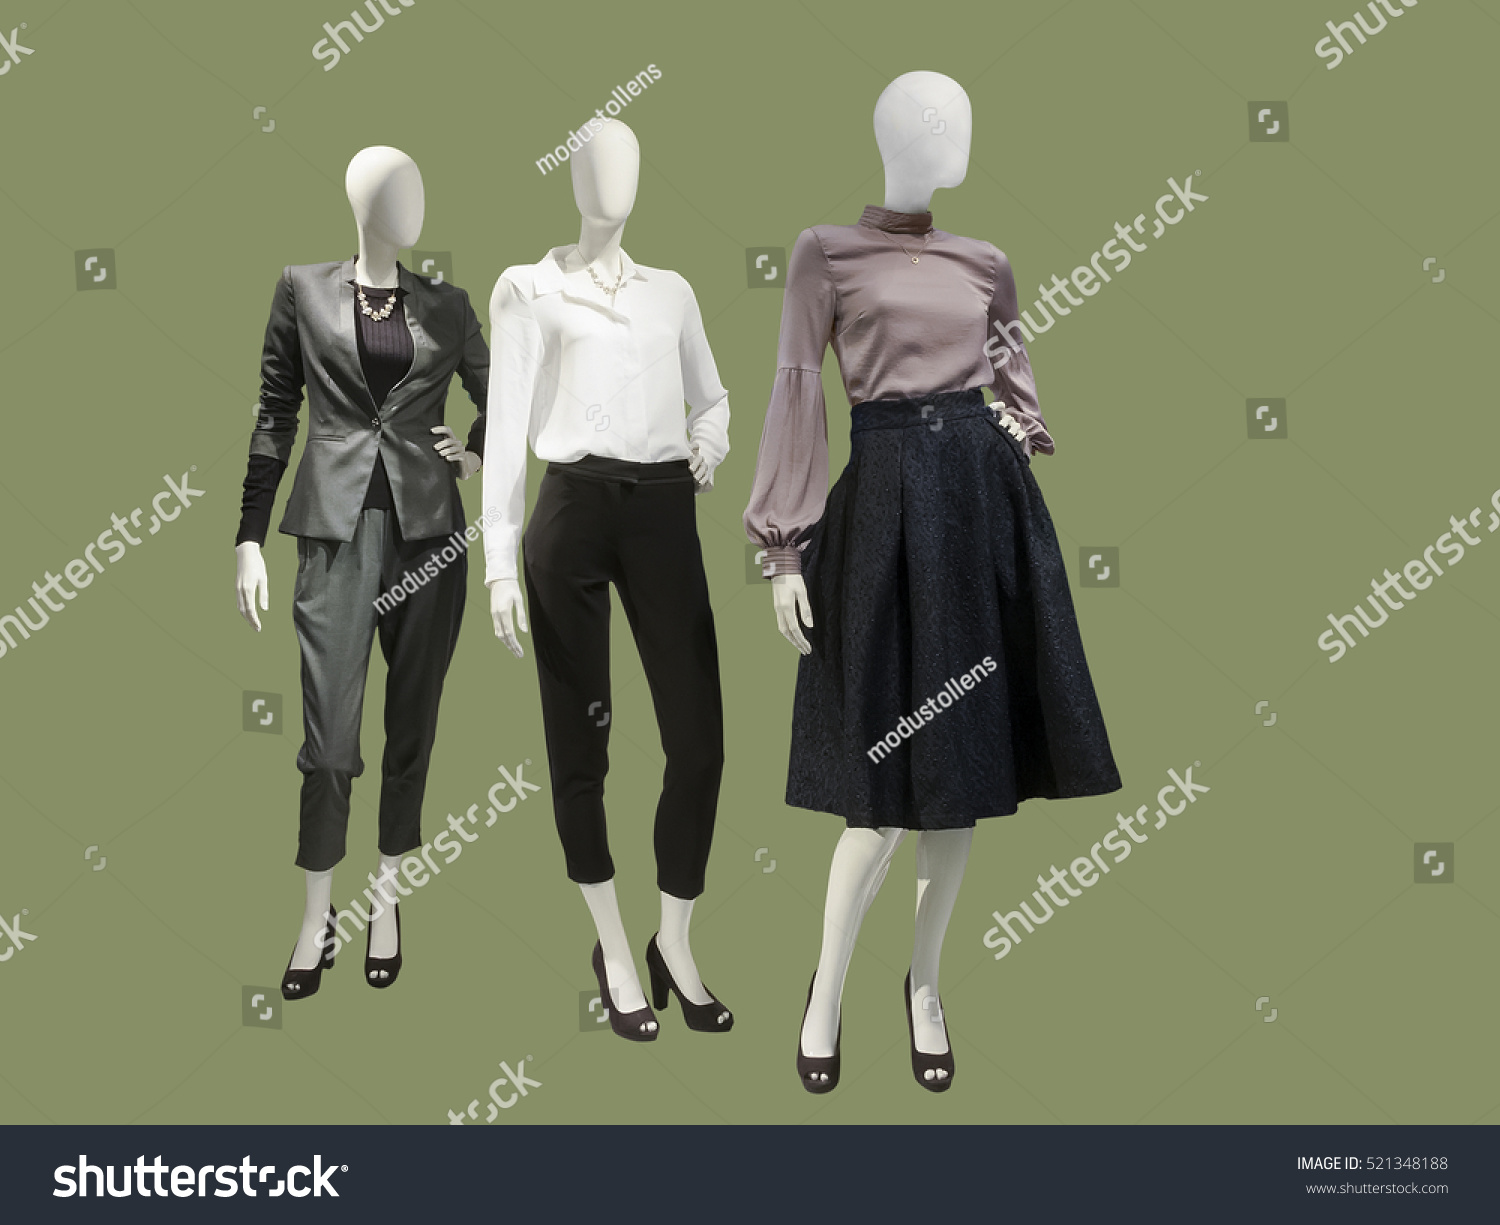 10,924 Dressed mannequin Images, Stock Photos & Vectors | Shutterstock